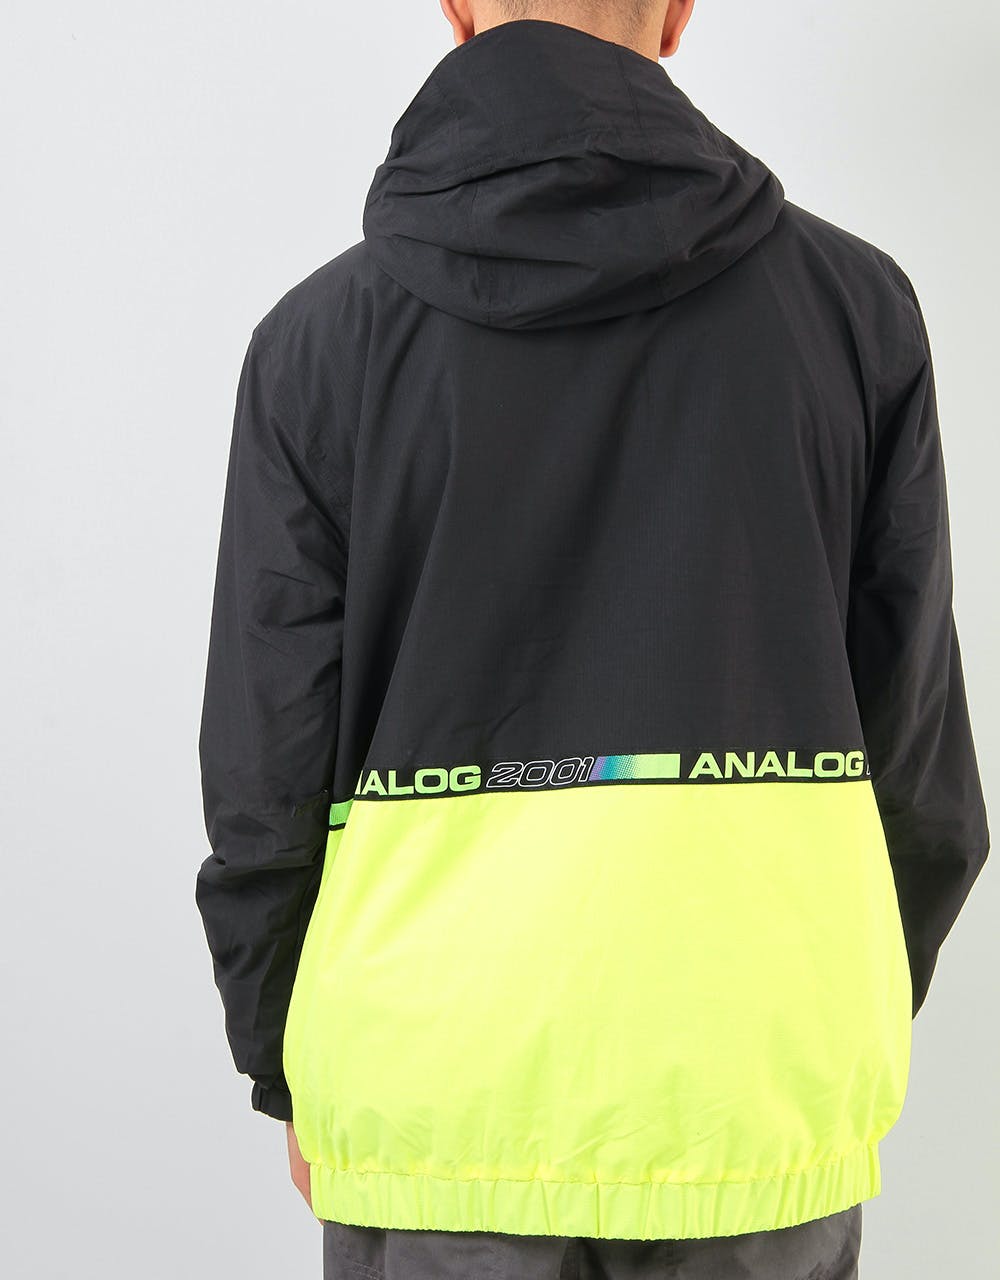 Analog Blast Cap 2020 Snowboard Jacket - True Black/High Viz